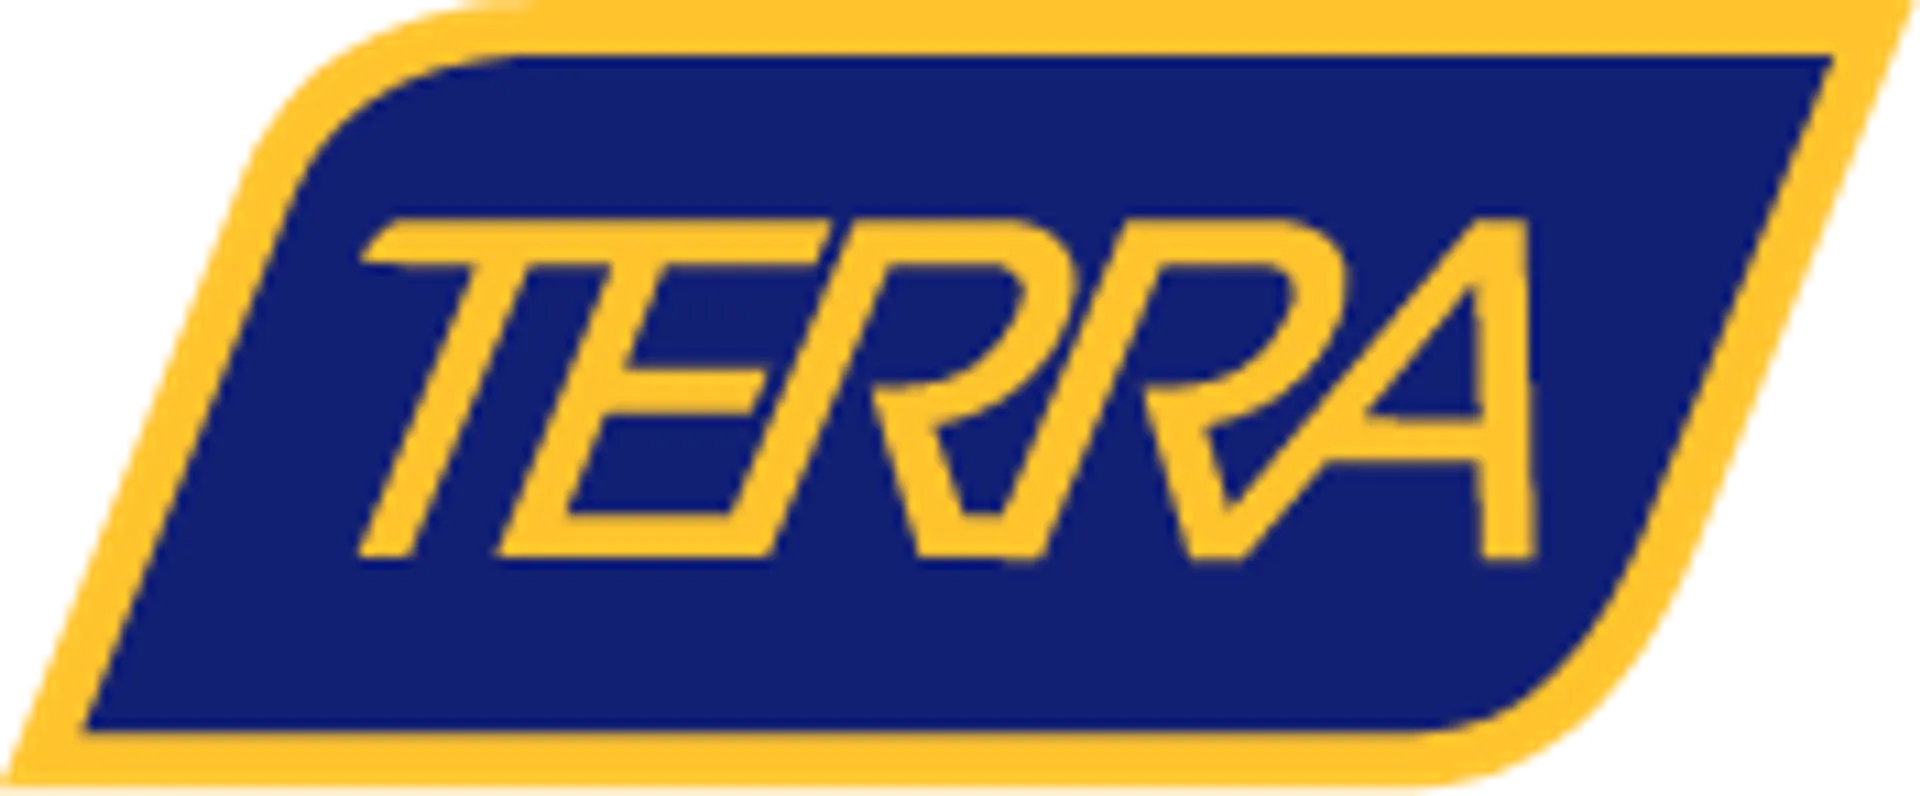 TERRA GREEN HOUSES logo of current flyer